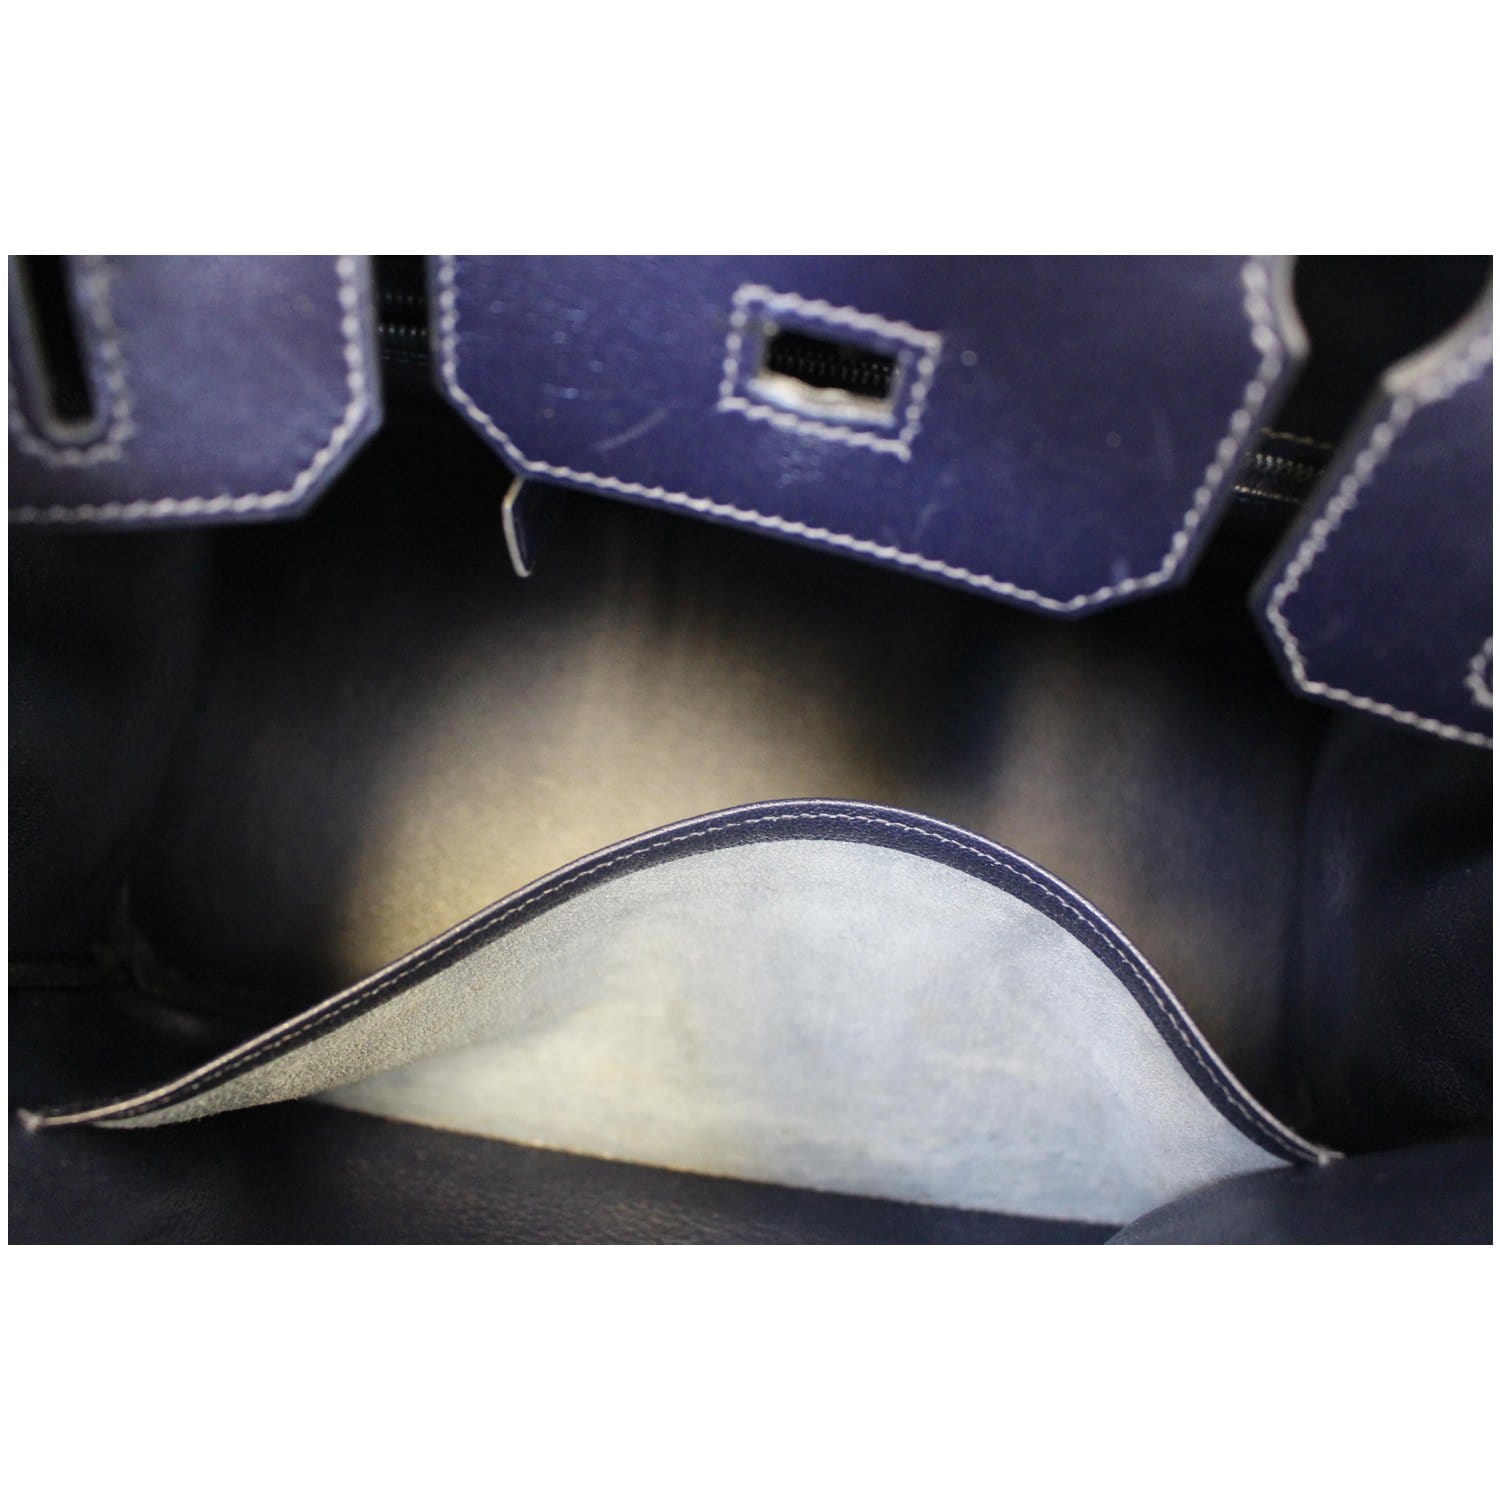 HERMES Birkin 30cm Smooth Calf Leather Silver Hardware Bag Navy